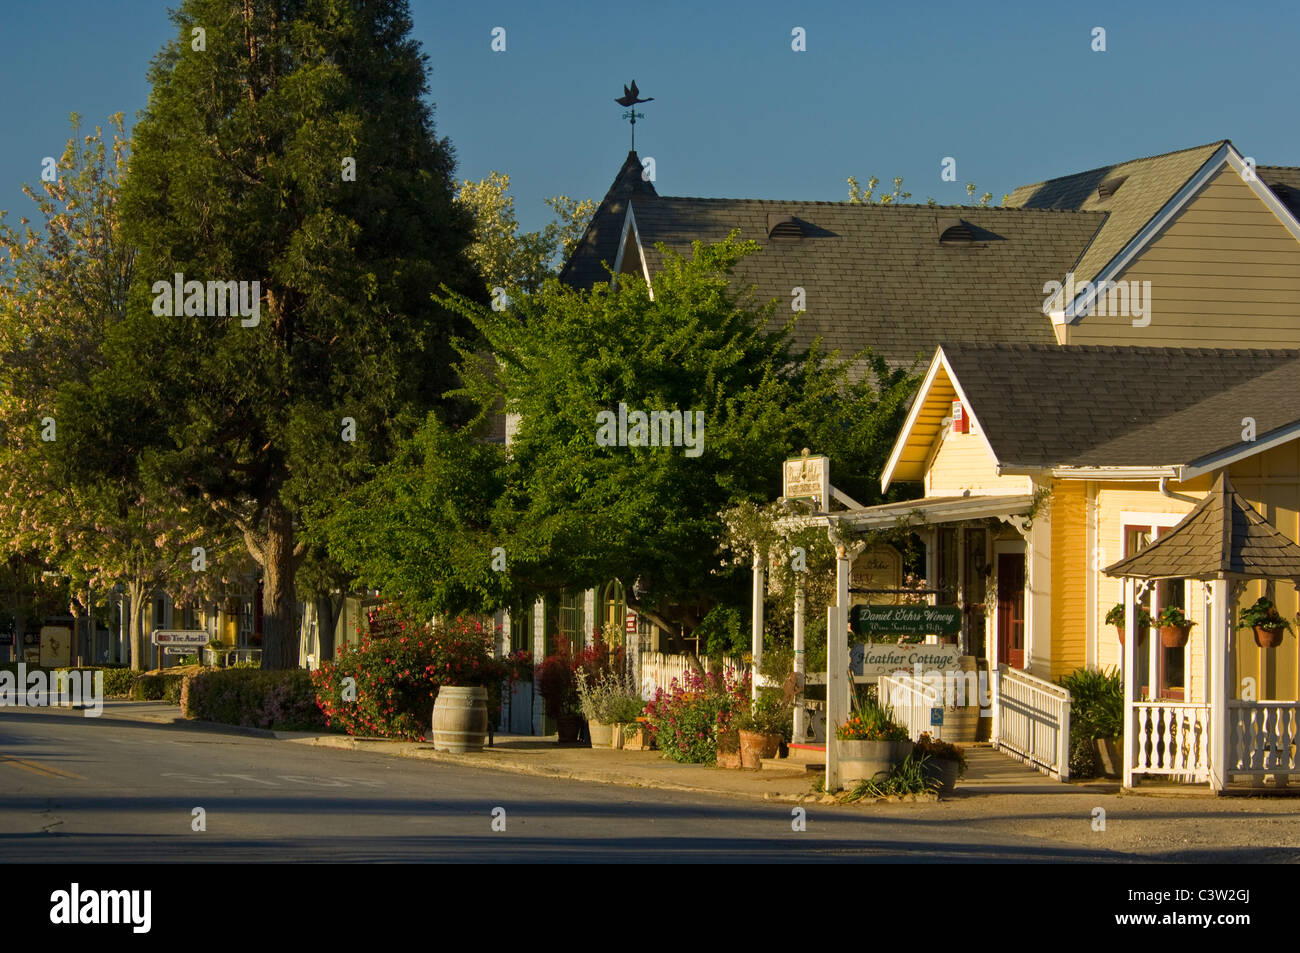 Le centre-ville de Los Olivos, comté de Santa Barbara, Californie Banque D'Images